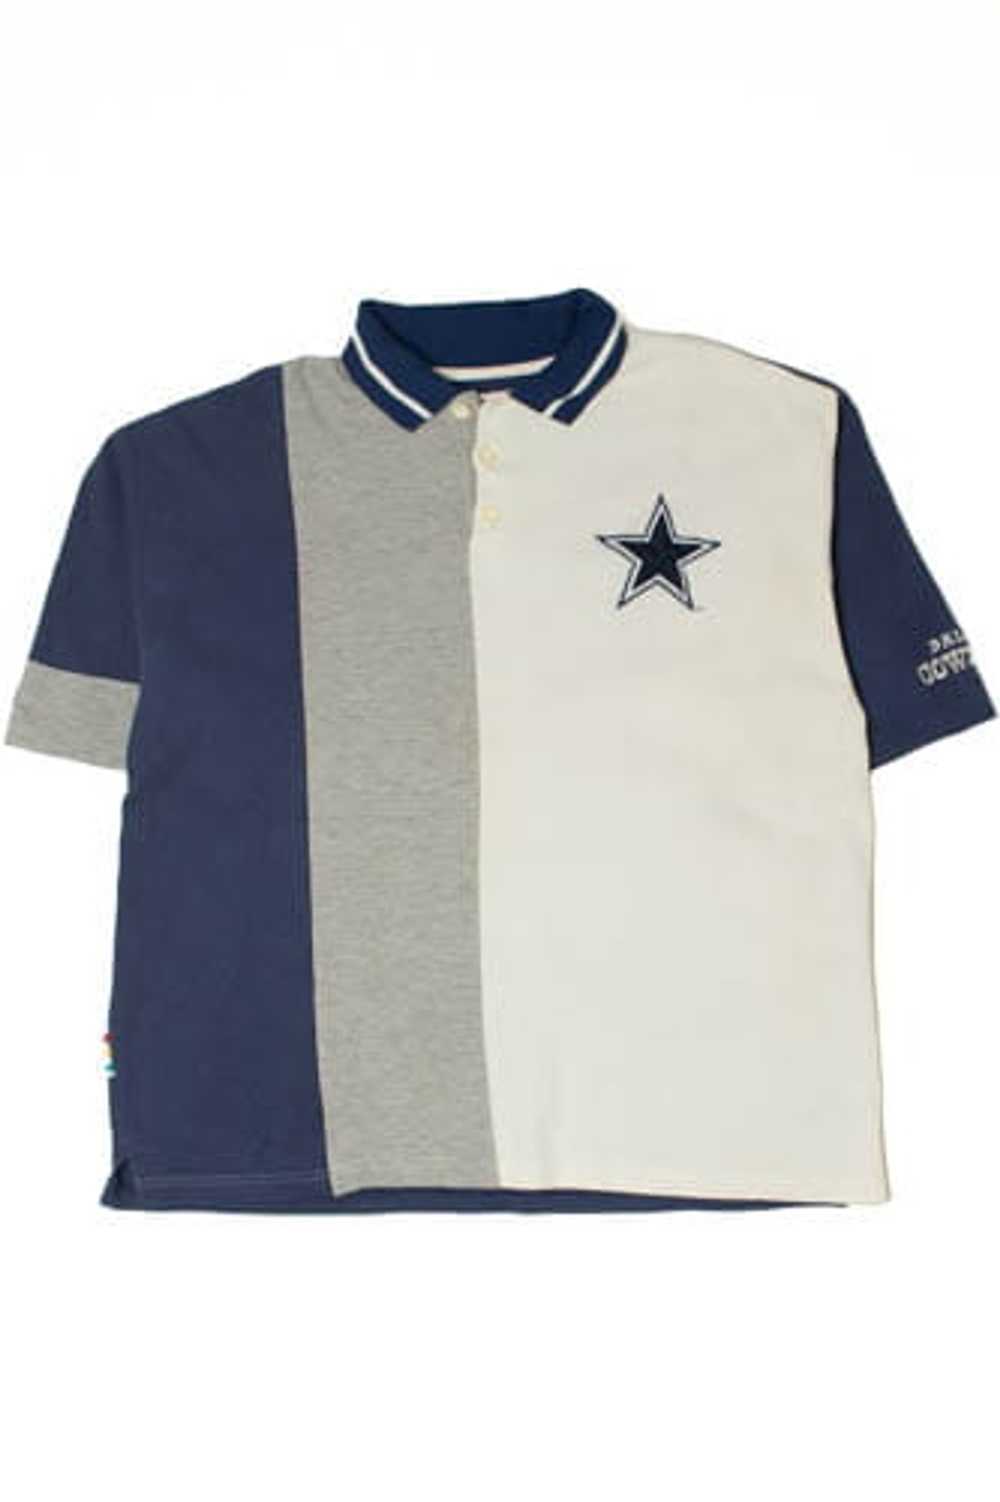 Vintage Dallas Cowboys Polo Shirt (1990s) - Gem